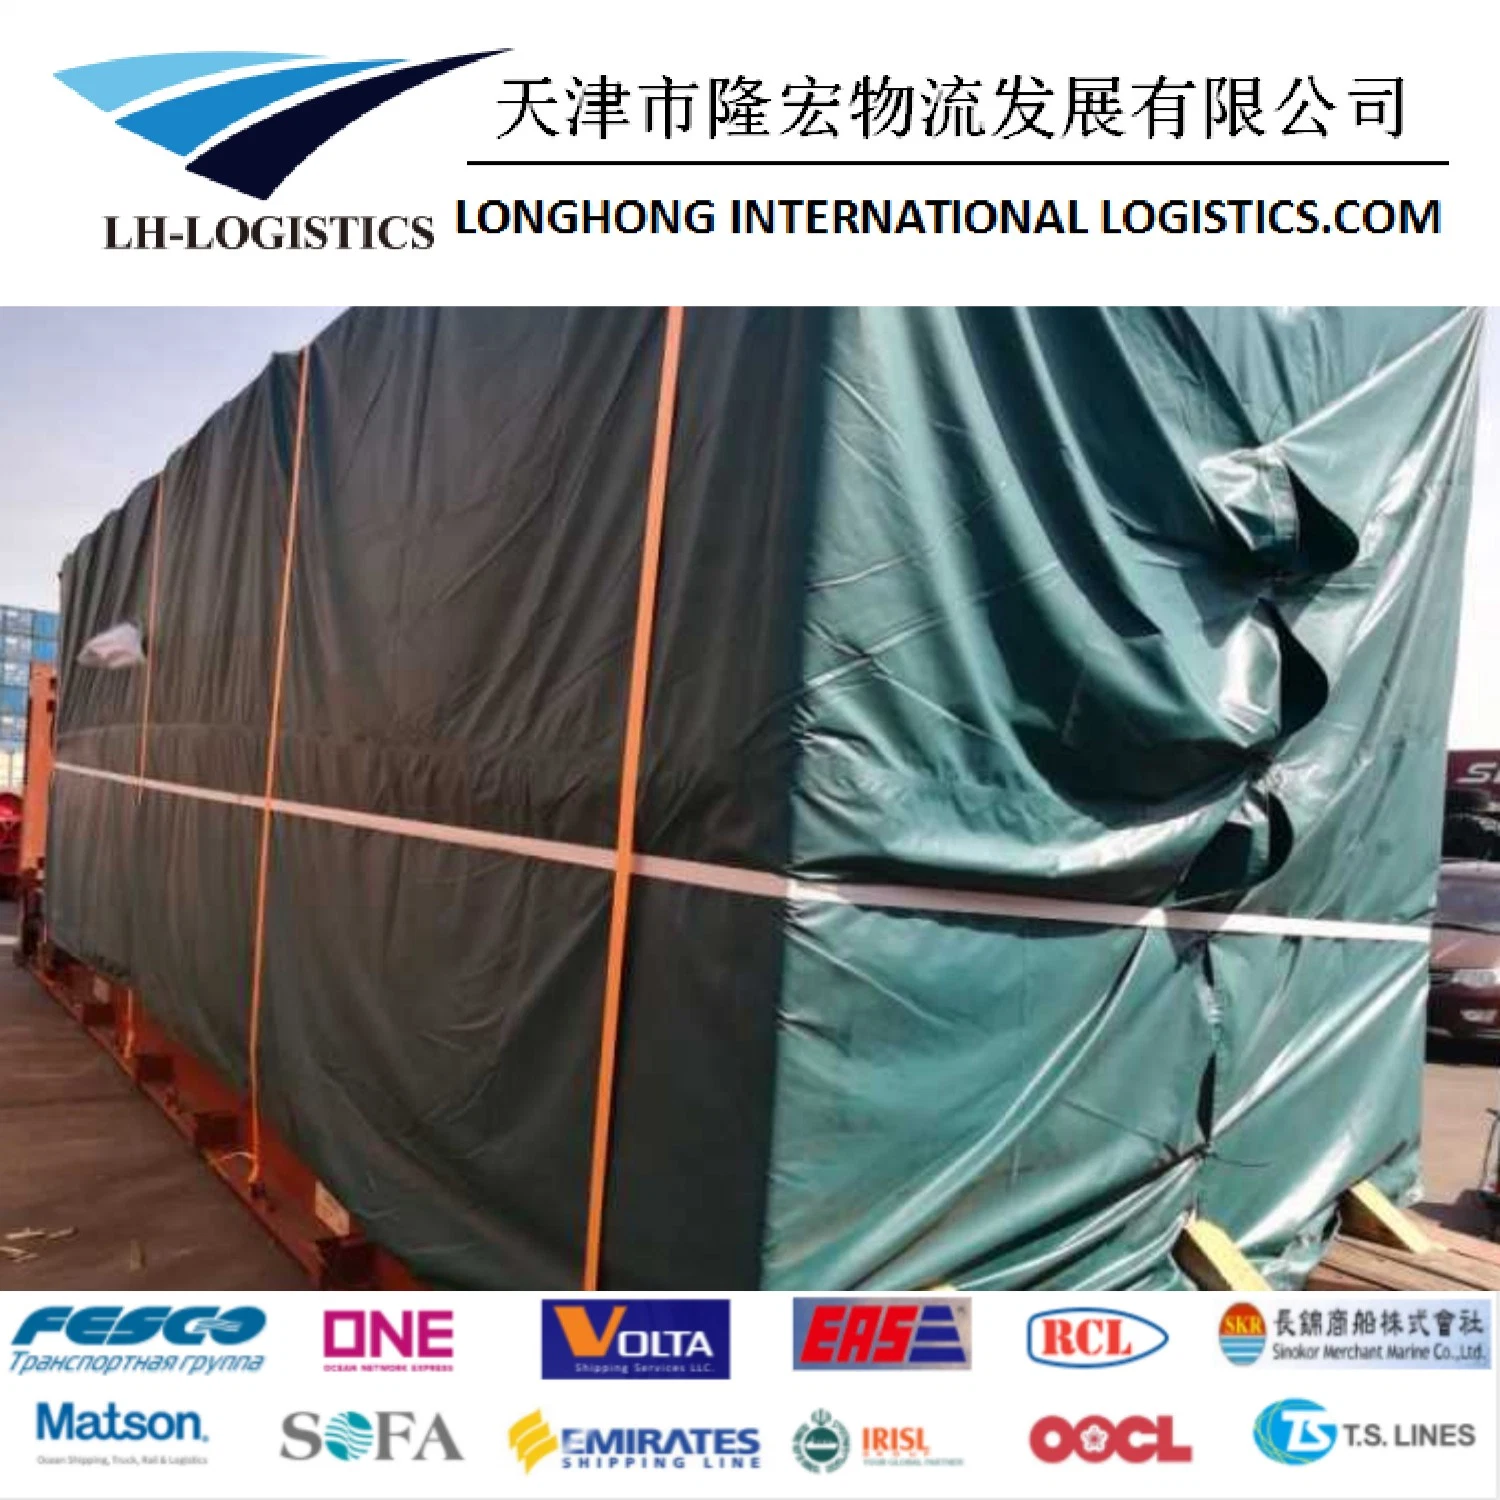 Customs Clearance for International Shipments Custom Clearance /Warehouse in China Shipping 1688